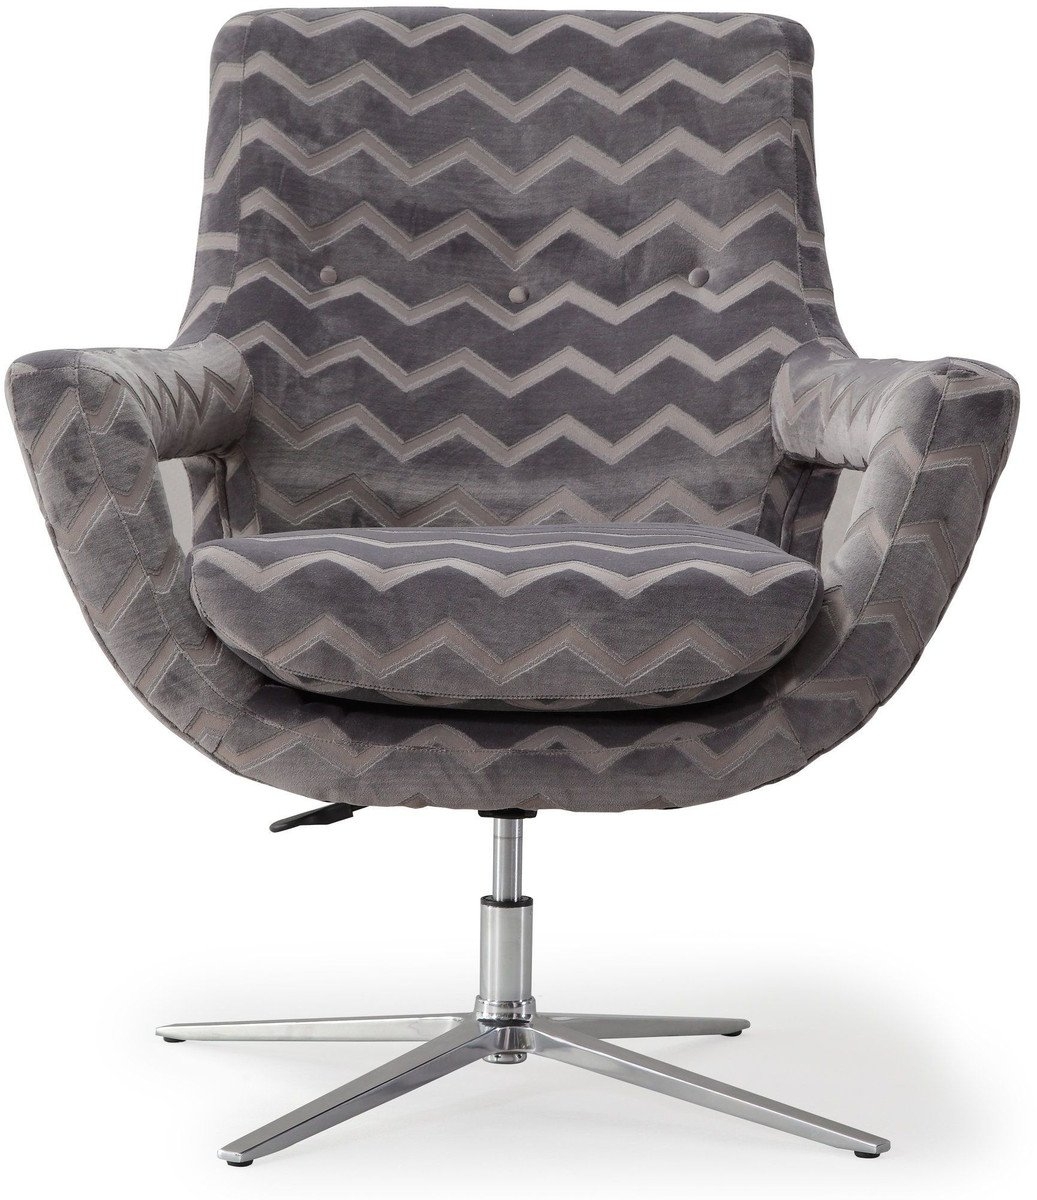 Fiona Morgan Striped Swivel Chair - Image 0